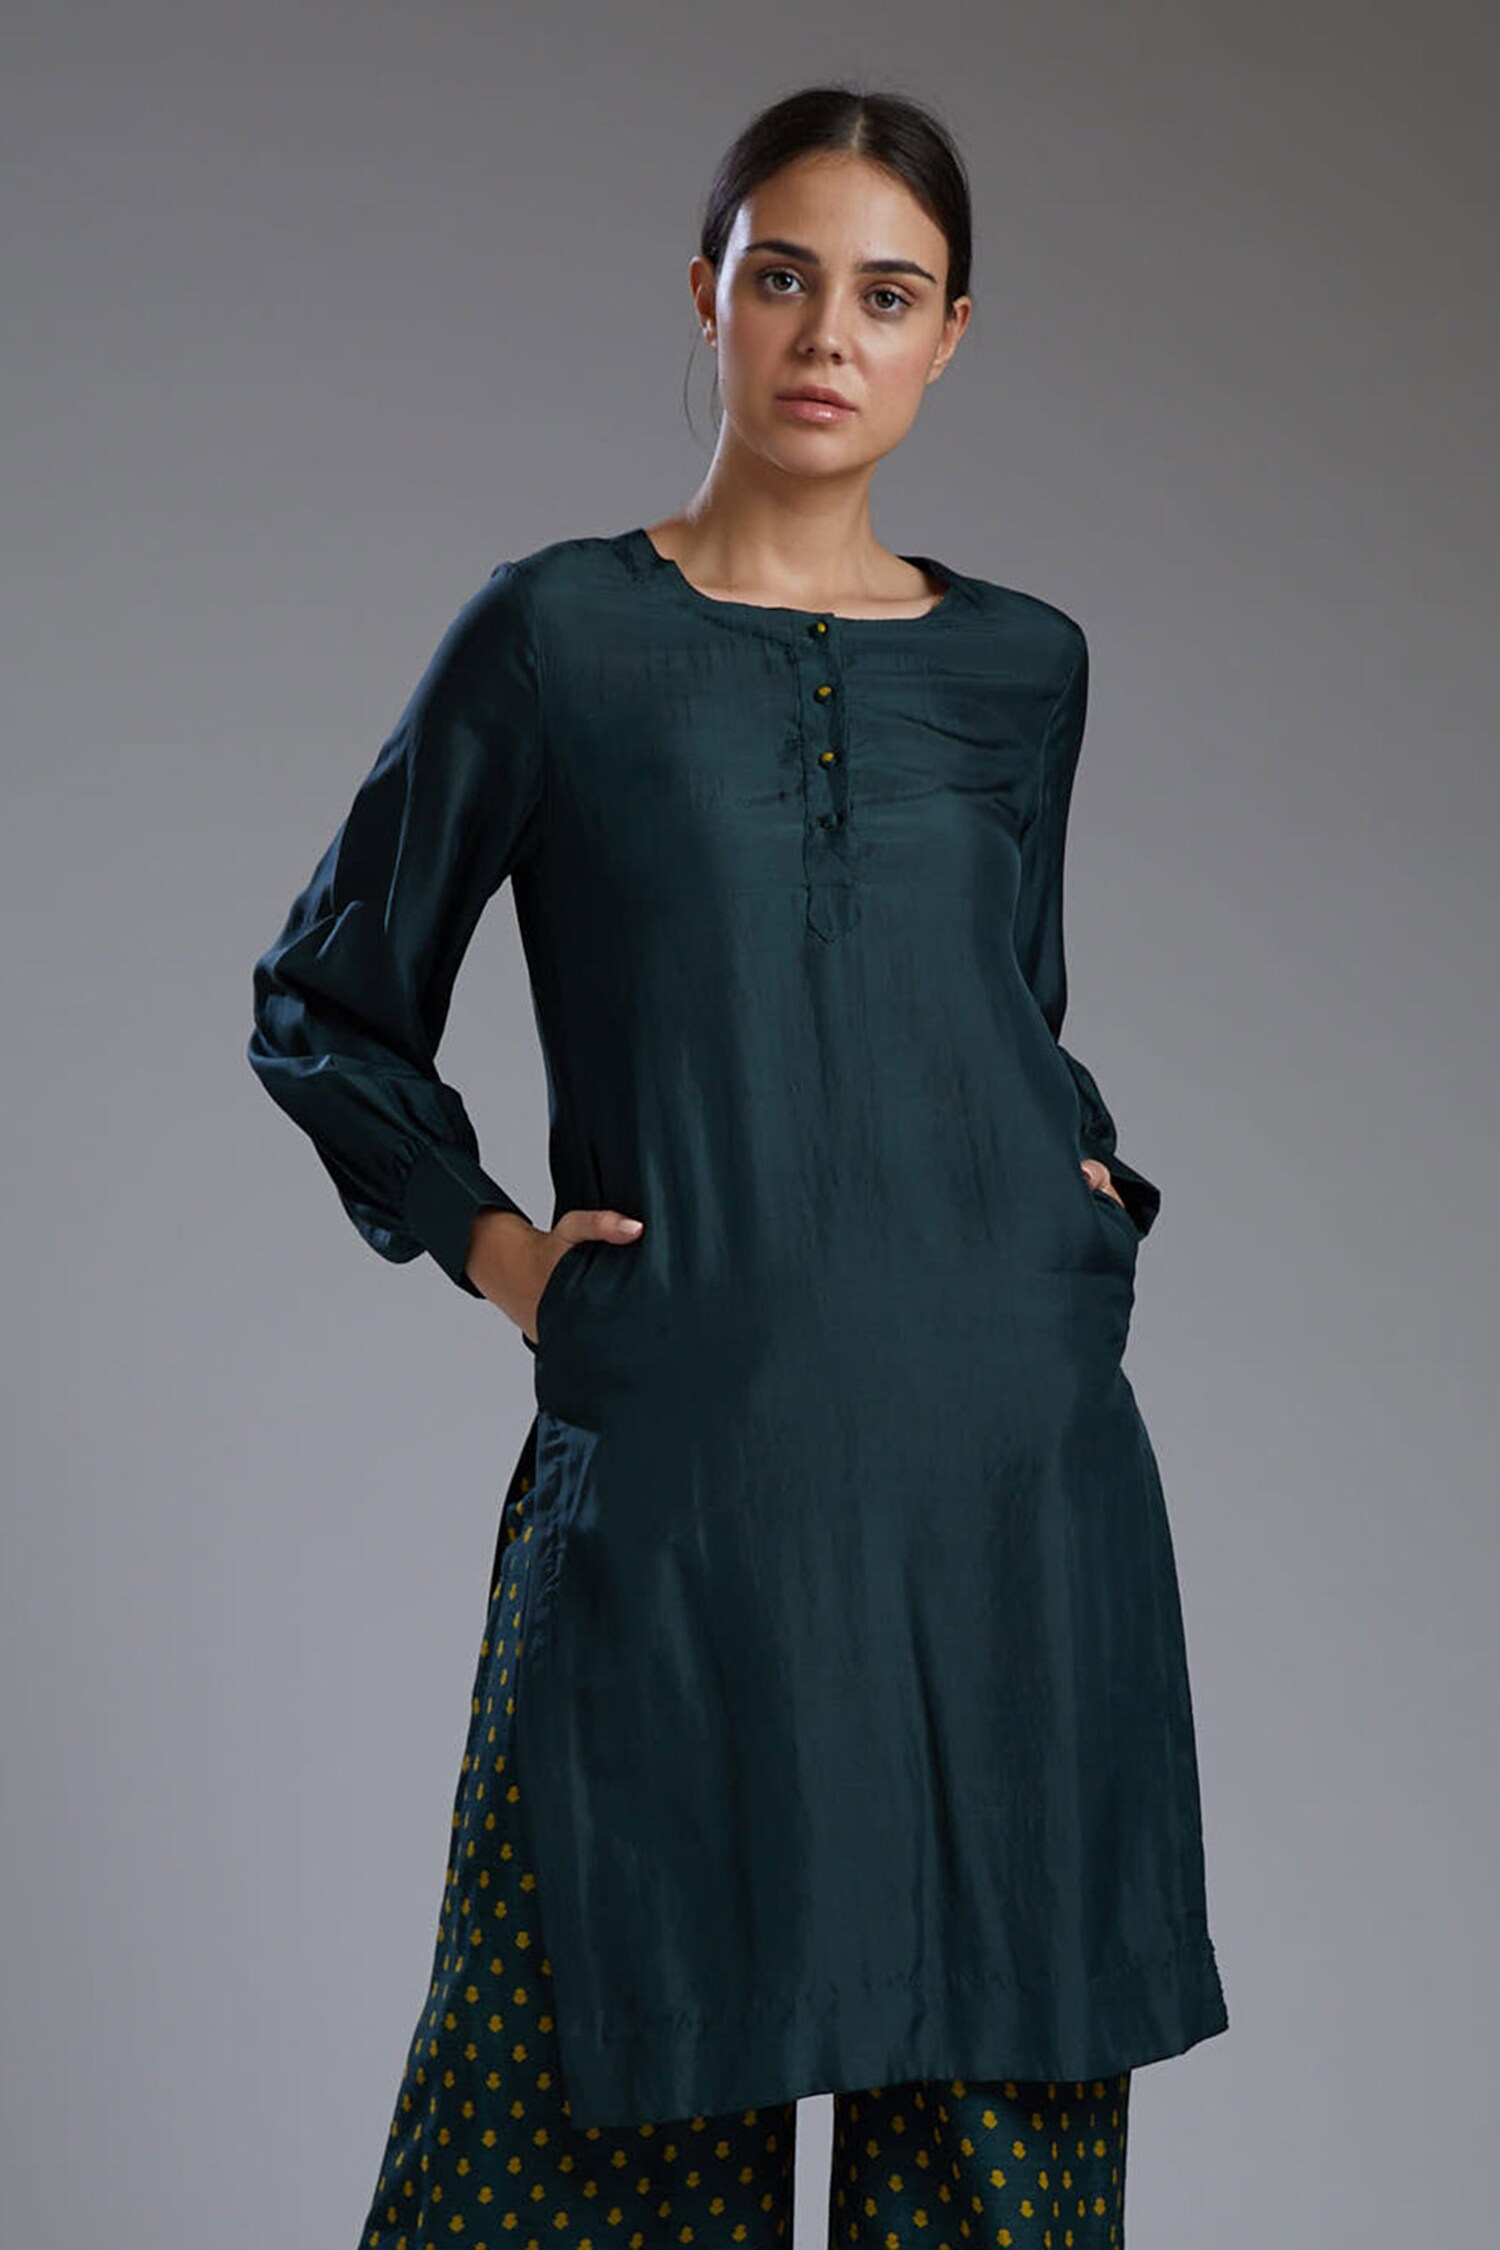 Buy KoAi Green Silk Tunic Online | Aza Fashions